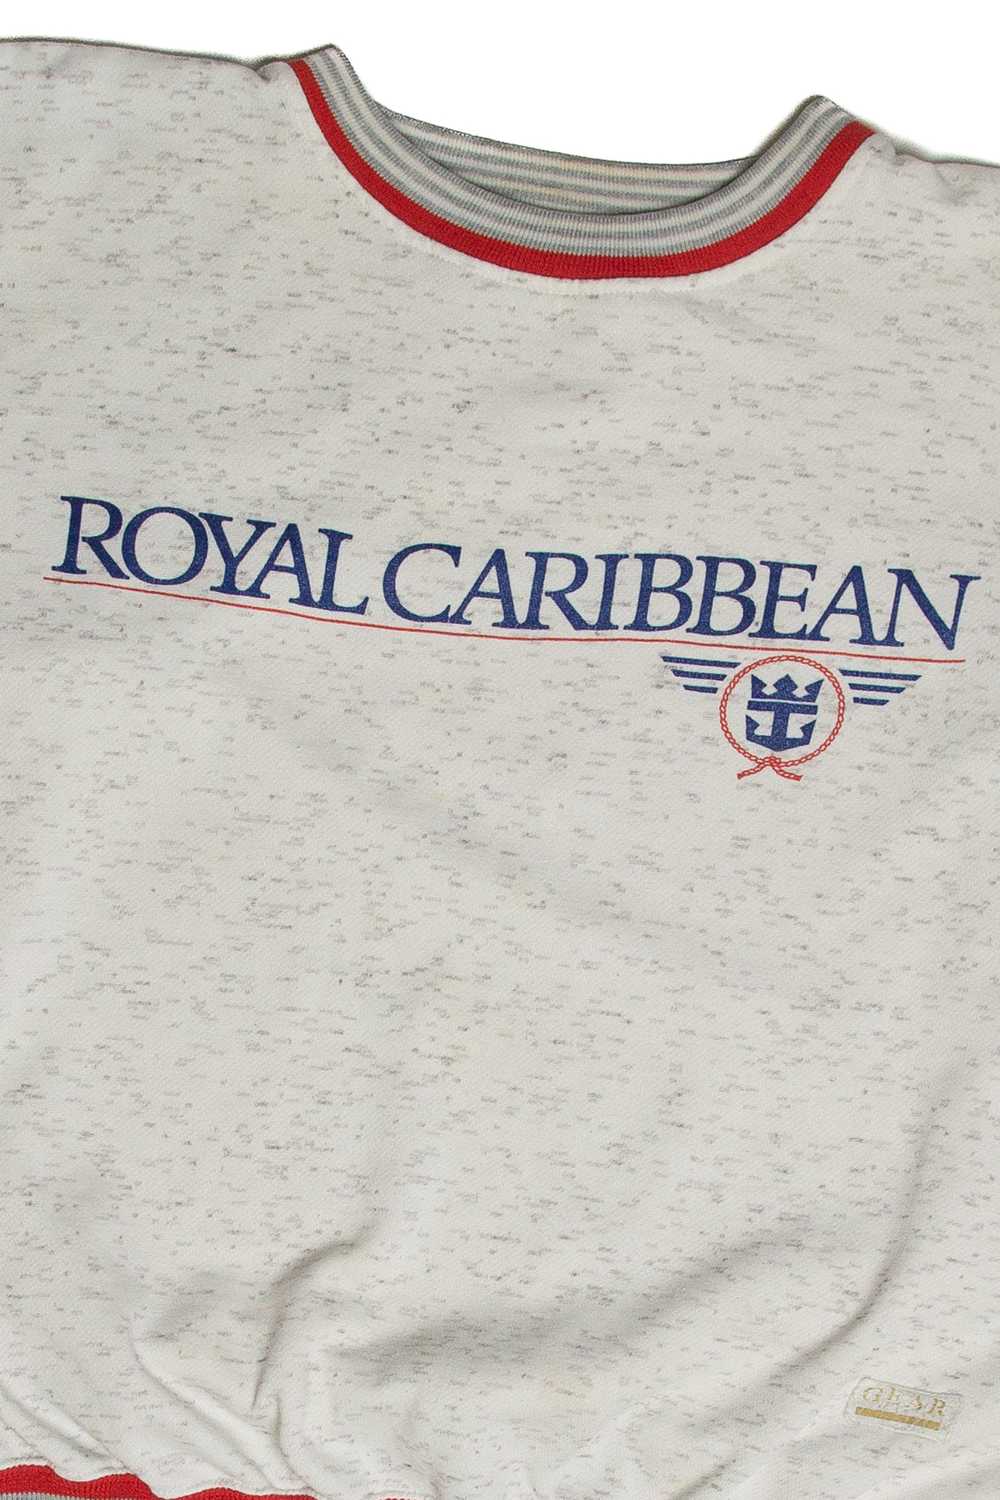 Vintage Royal Caribbean Sweatshirt - image 2